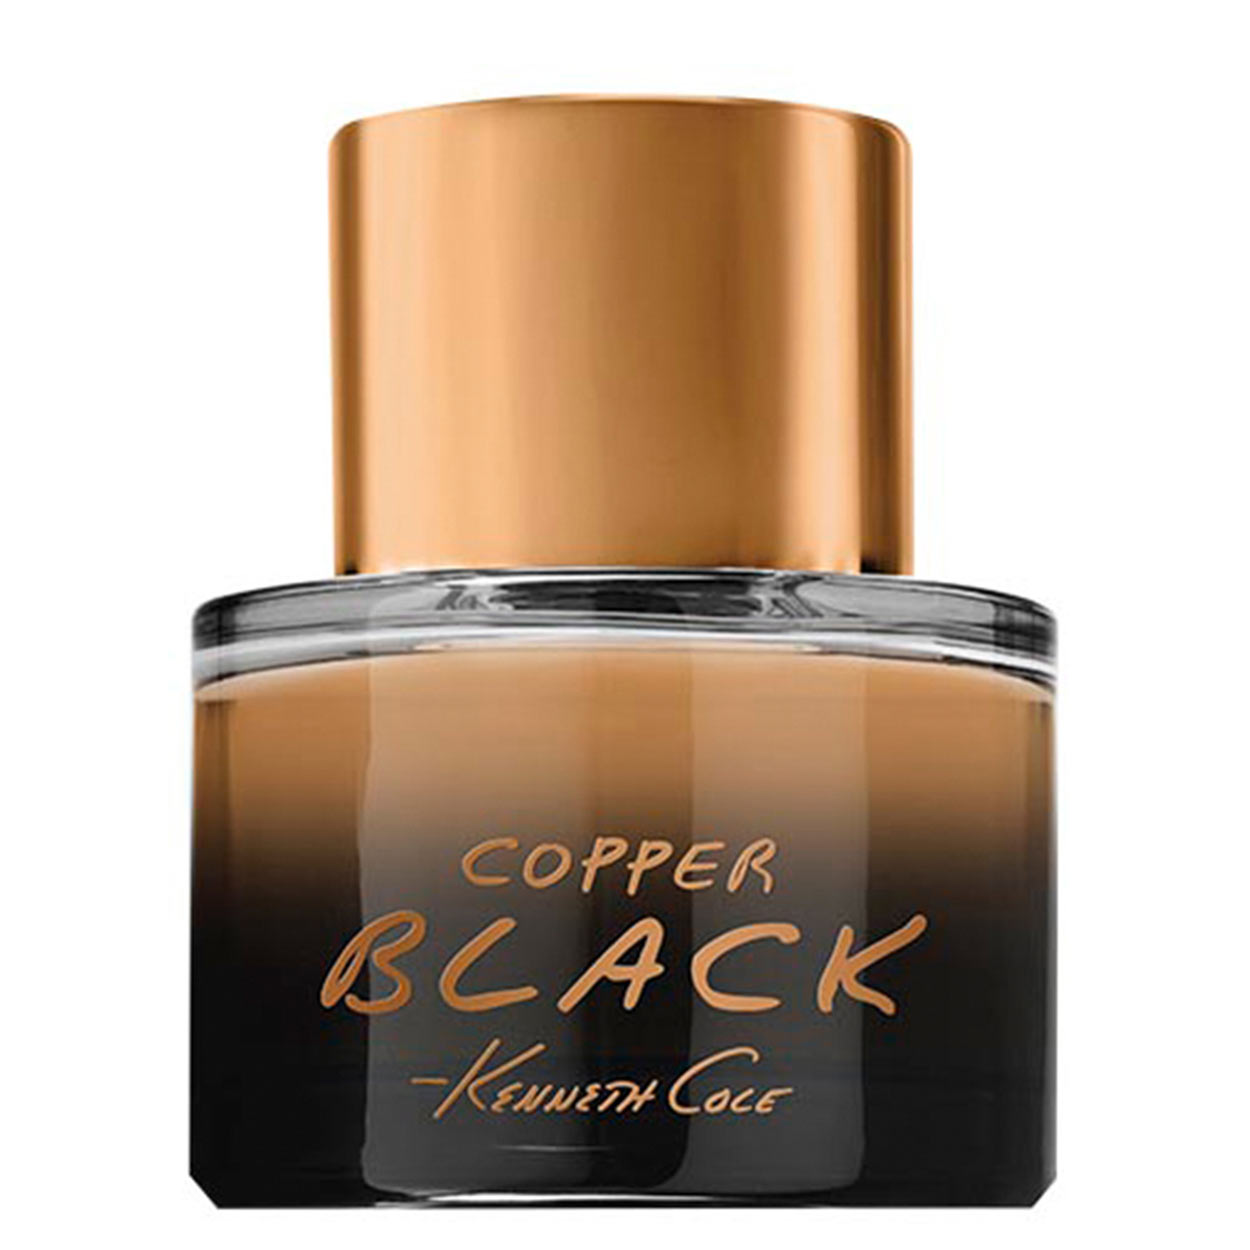 Copper Black Kenneth Cole Image